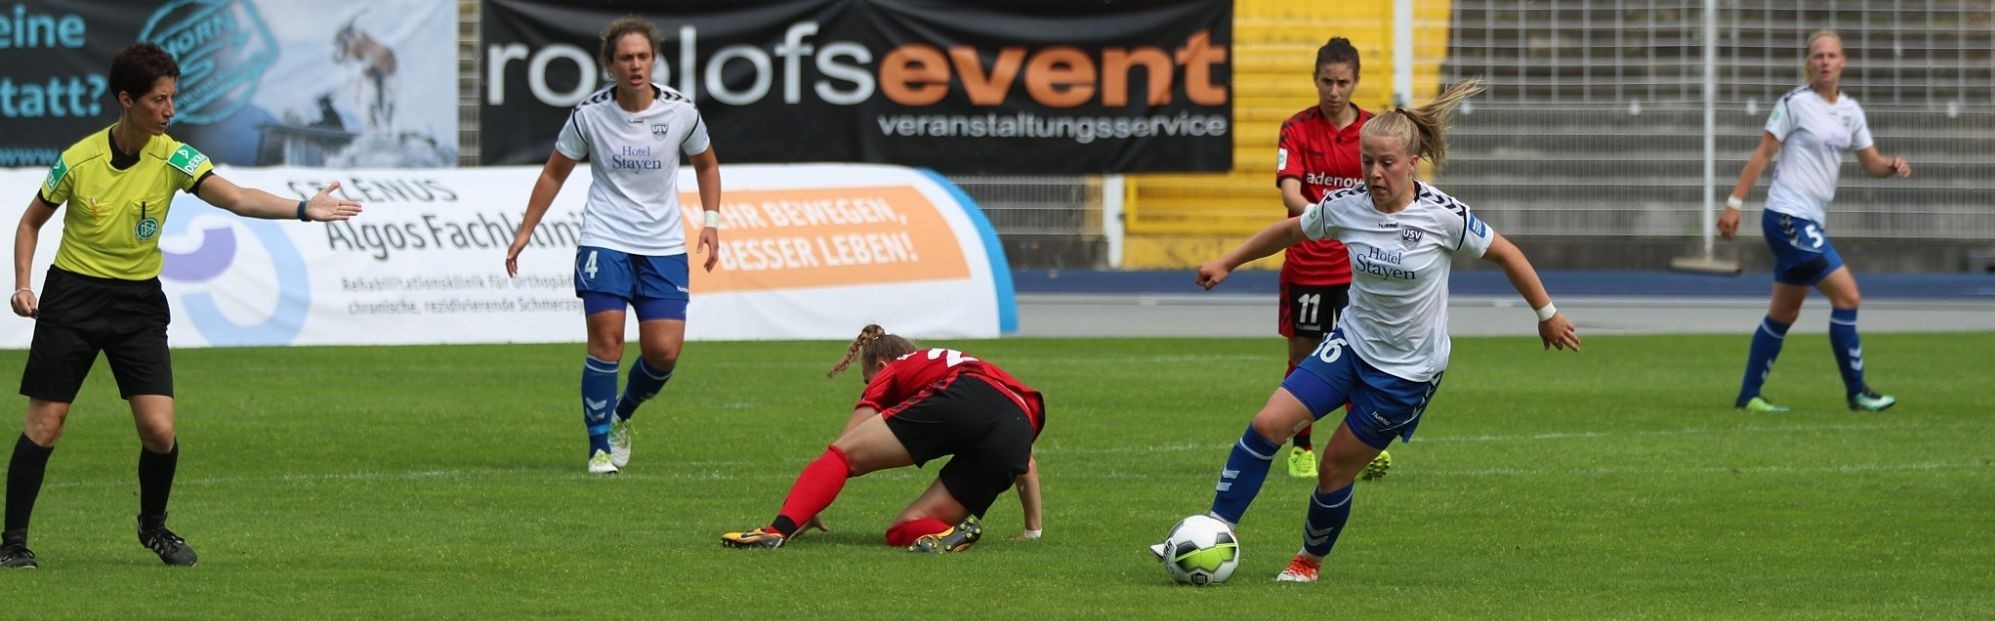 FF USV Jena gegen SC Freiburg